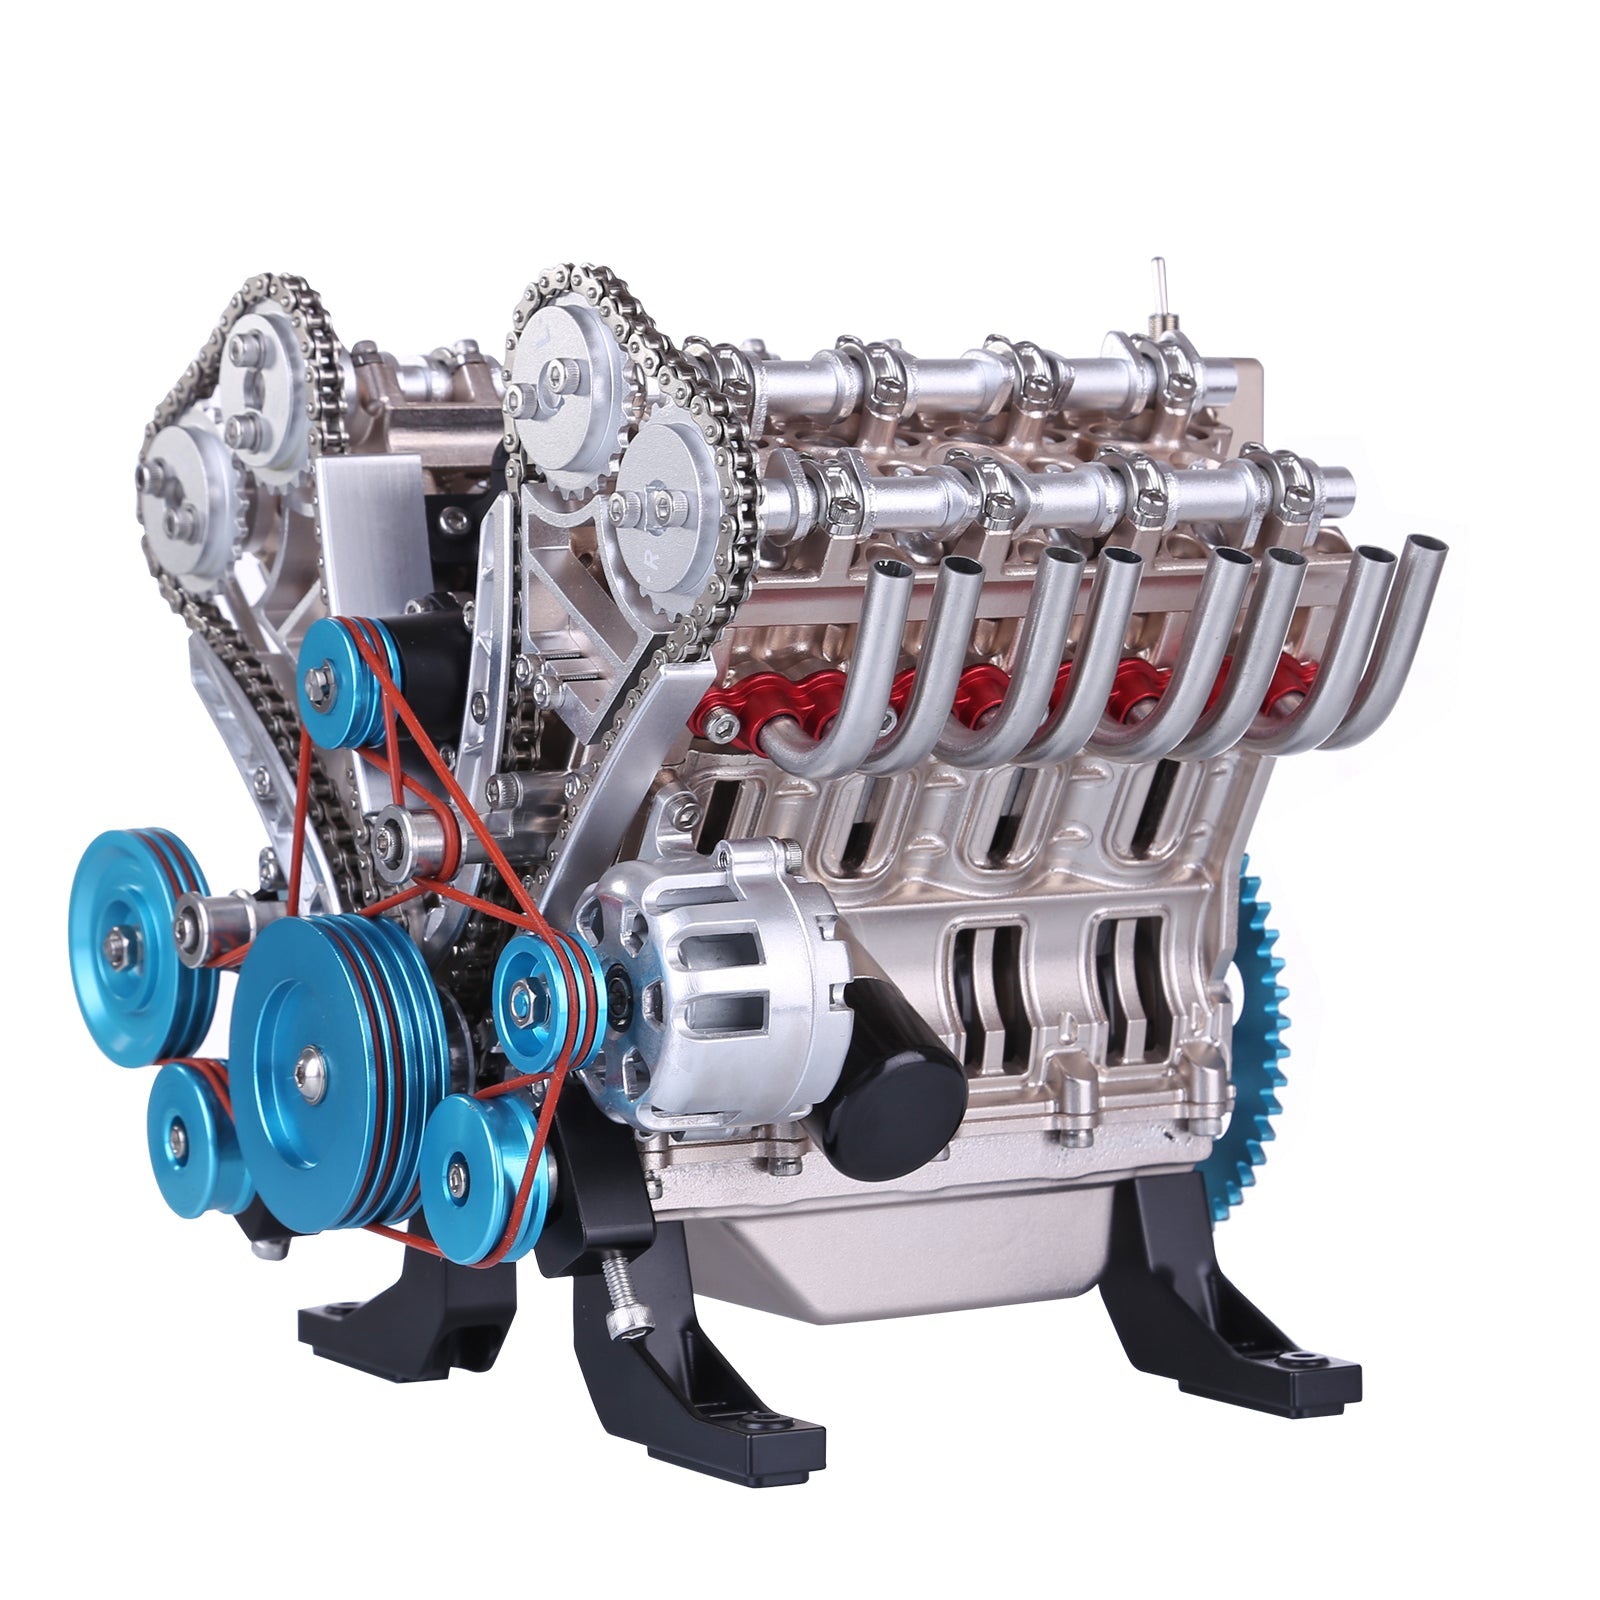 TECHING V8 Engine Model Kit - Construya su propio motor V8 que funcione –  enginediyshop